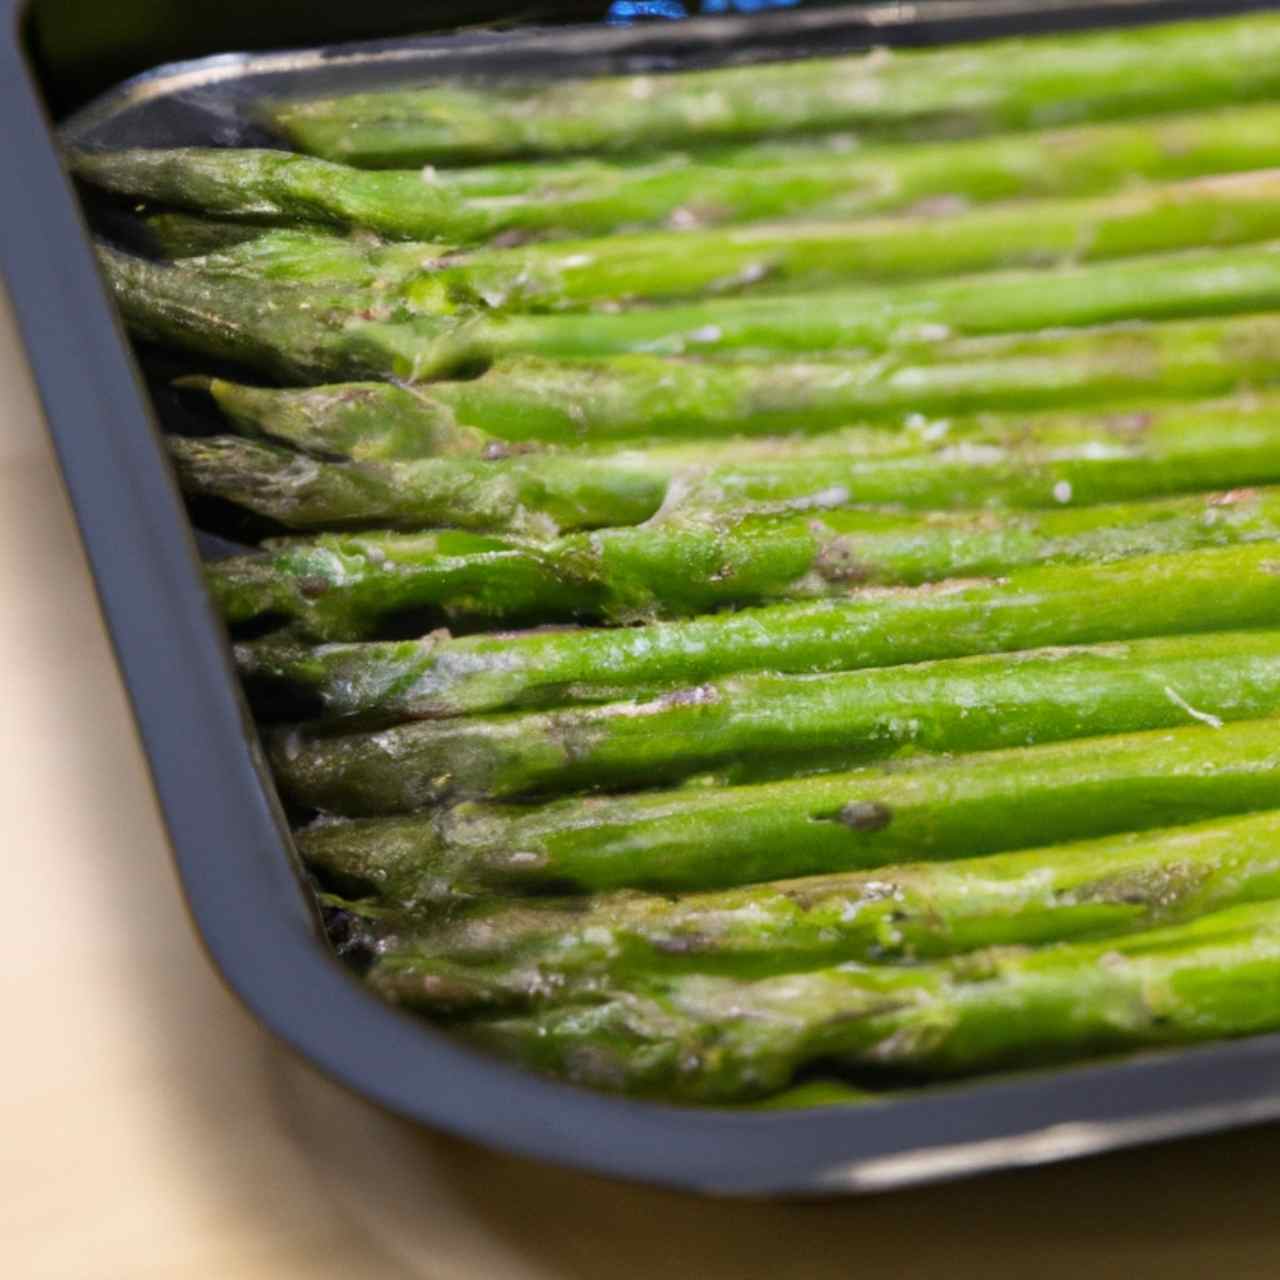 Top 5 Ways To Reheat Asparagus